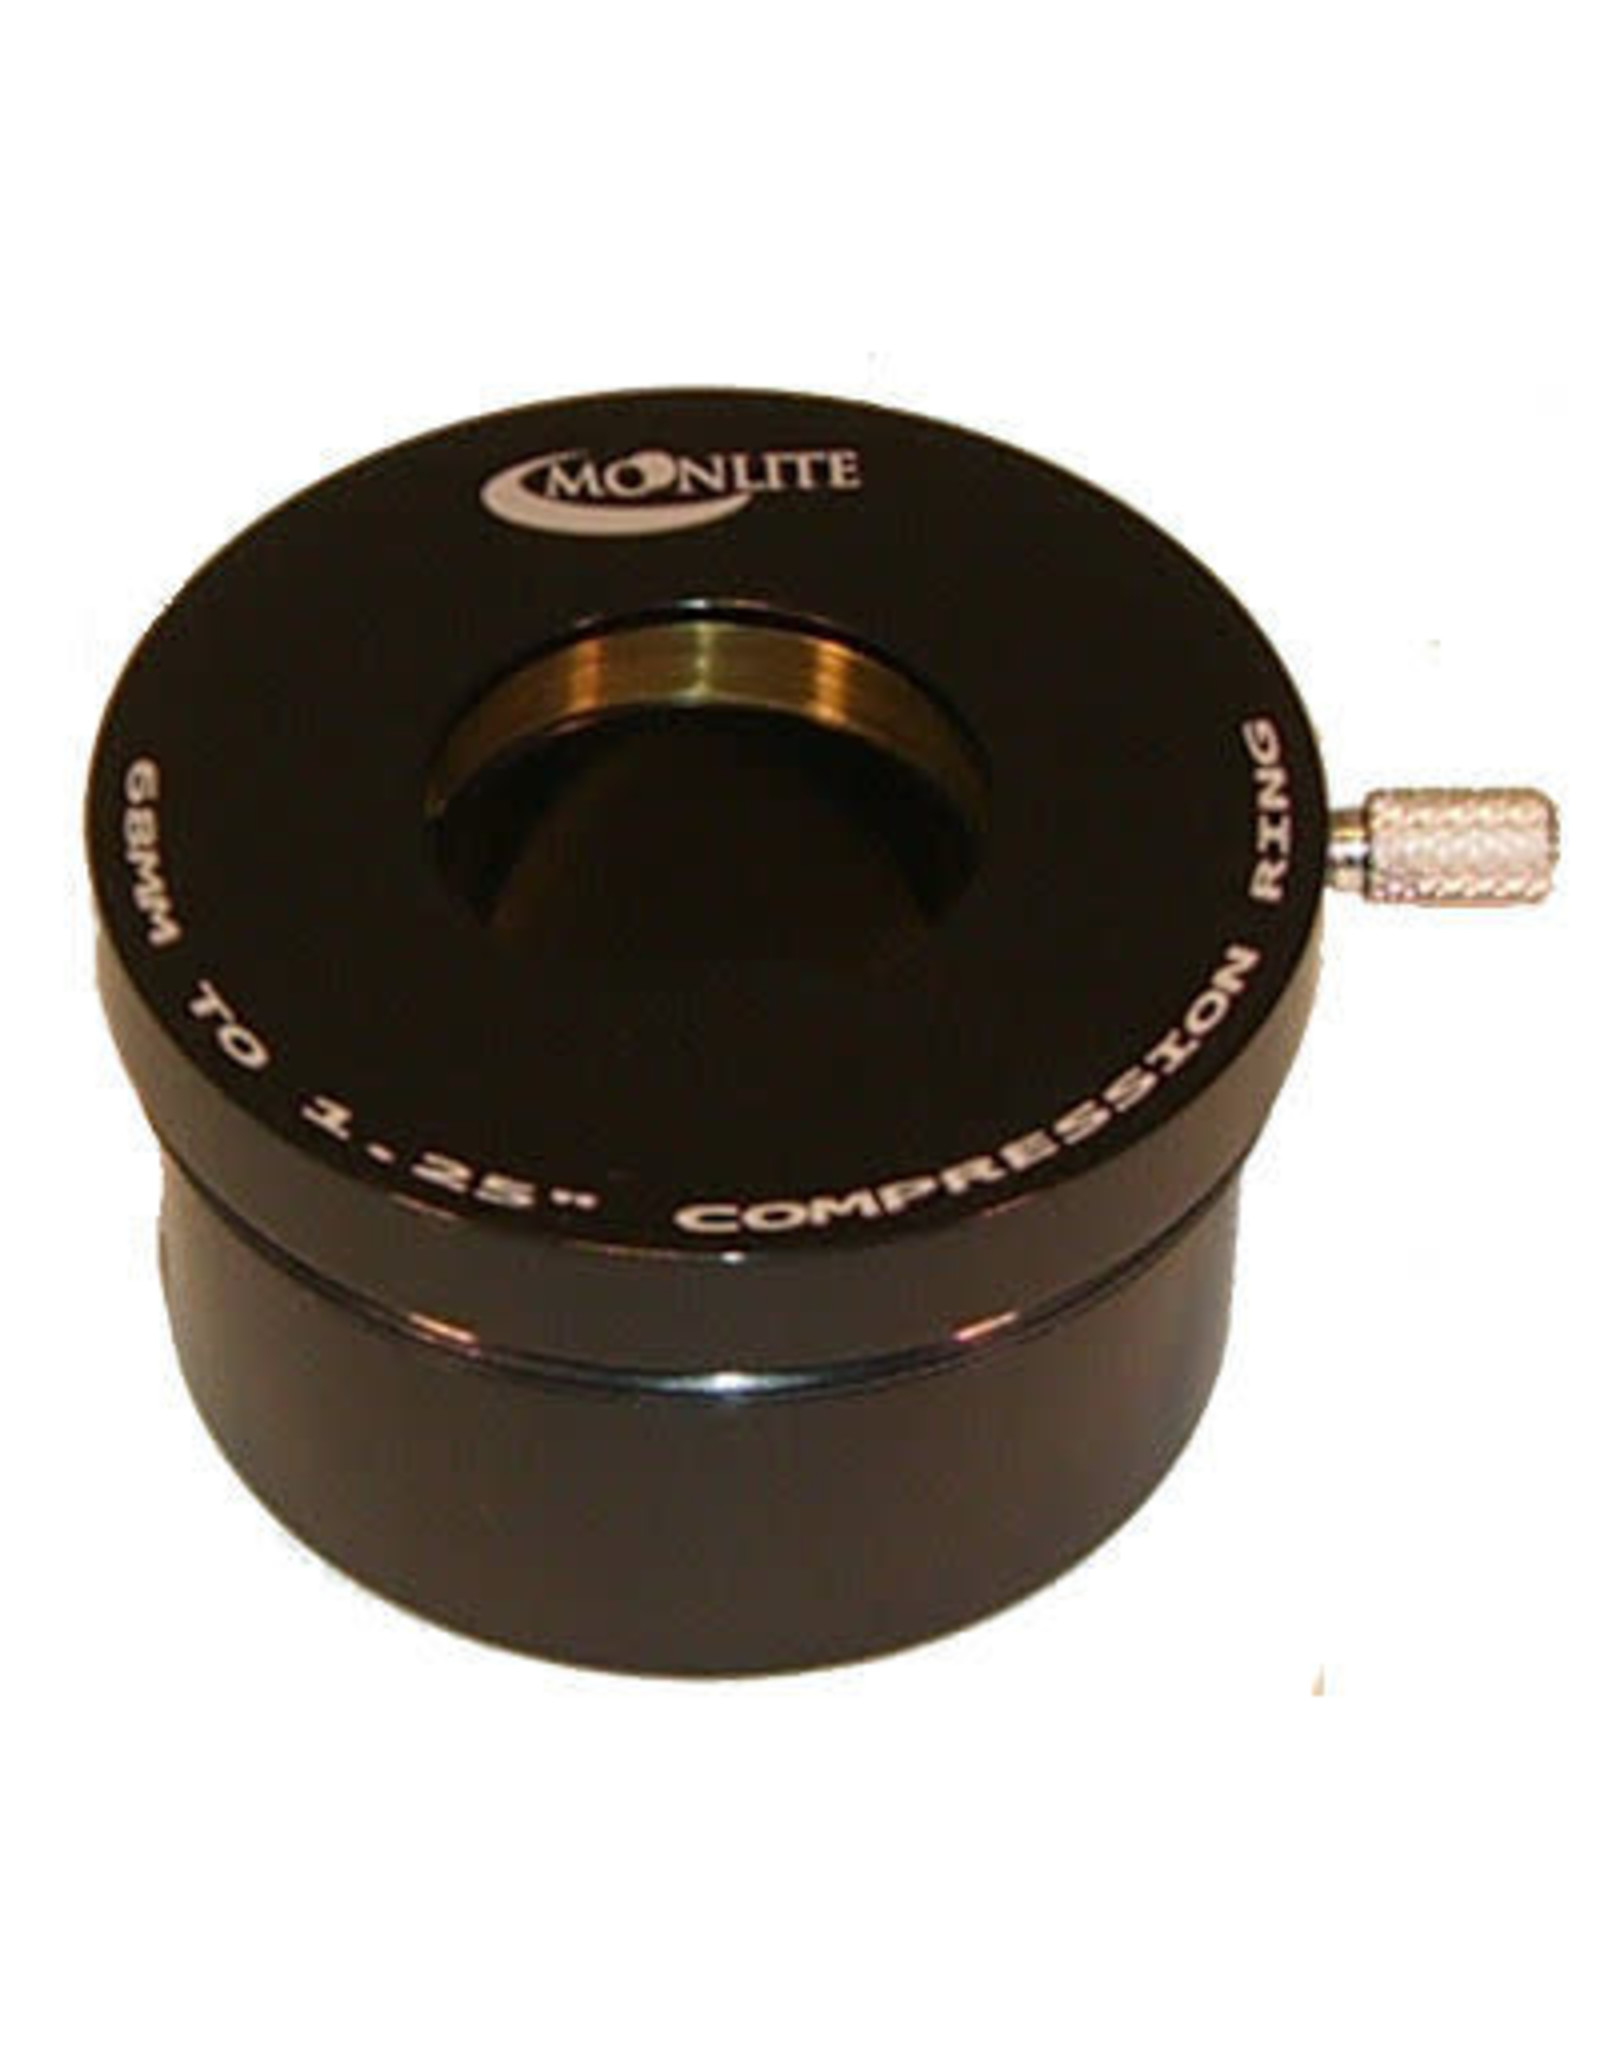 Moonlite MoonLite 2 1/2 inch 68mm thread to 1 1/4 inch Eyepiece Adapter (Model 68mmto125-Adapter)